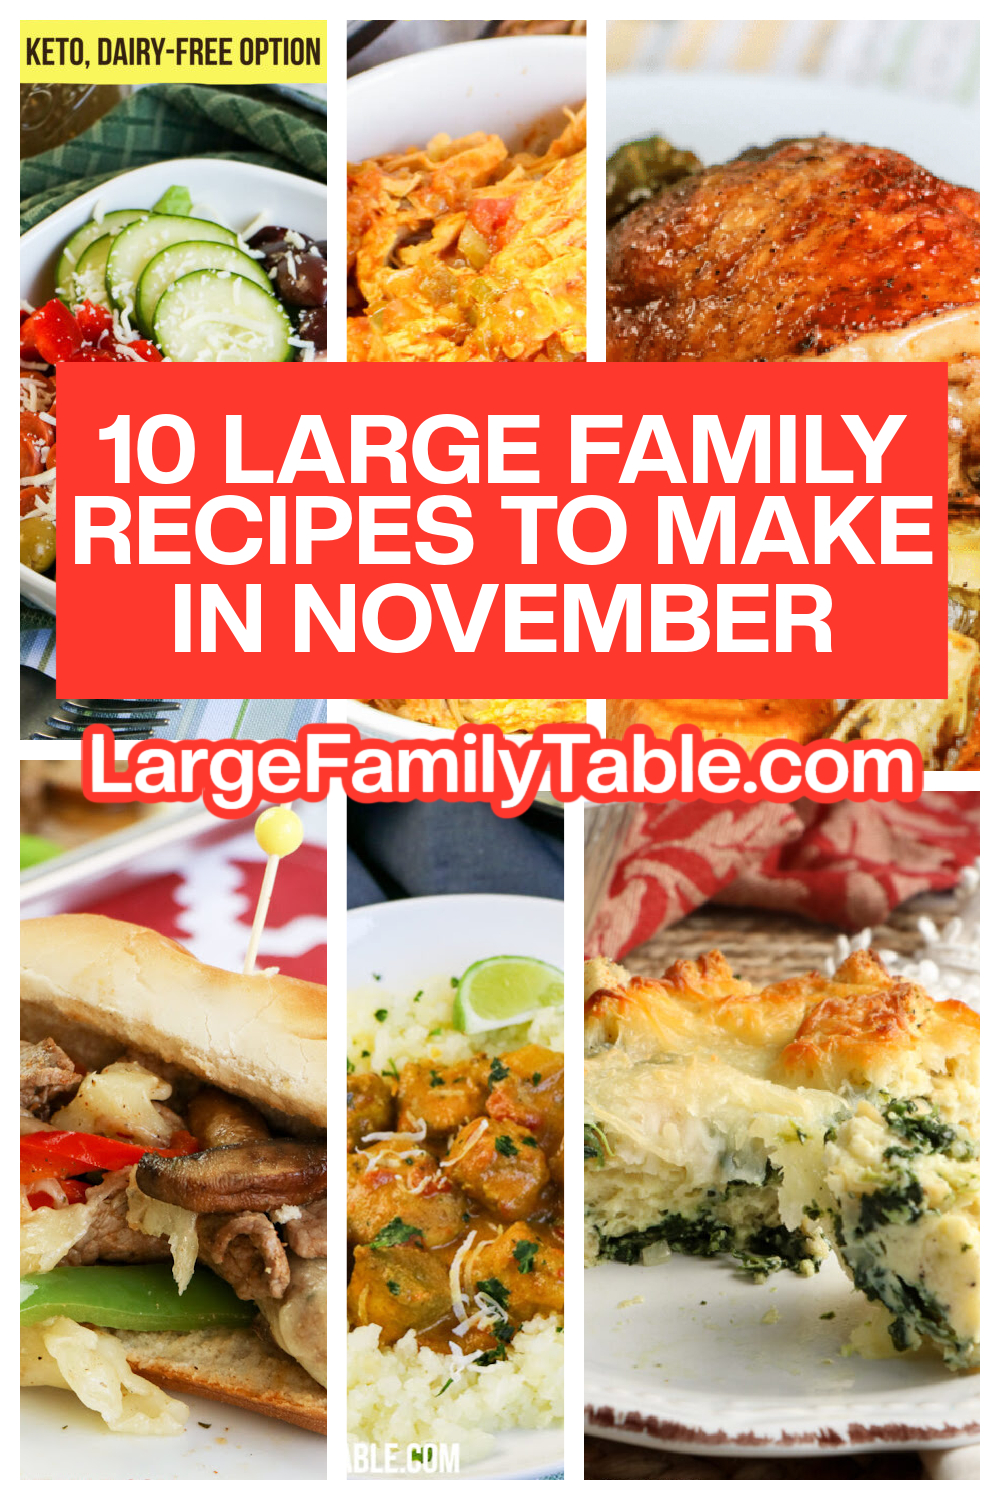 10 Large Family Recipes to Make in November